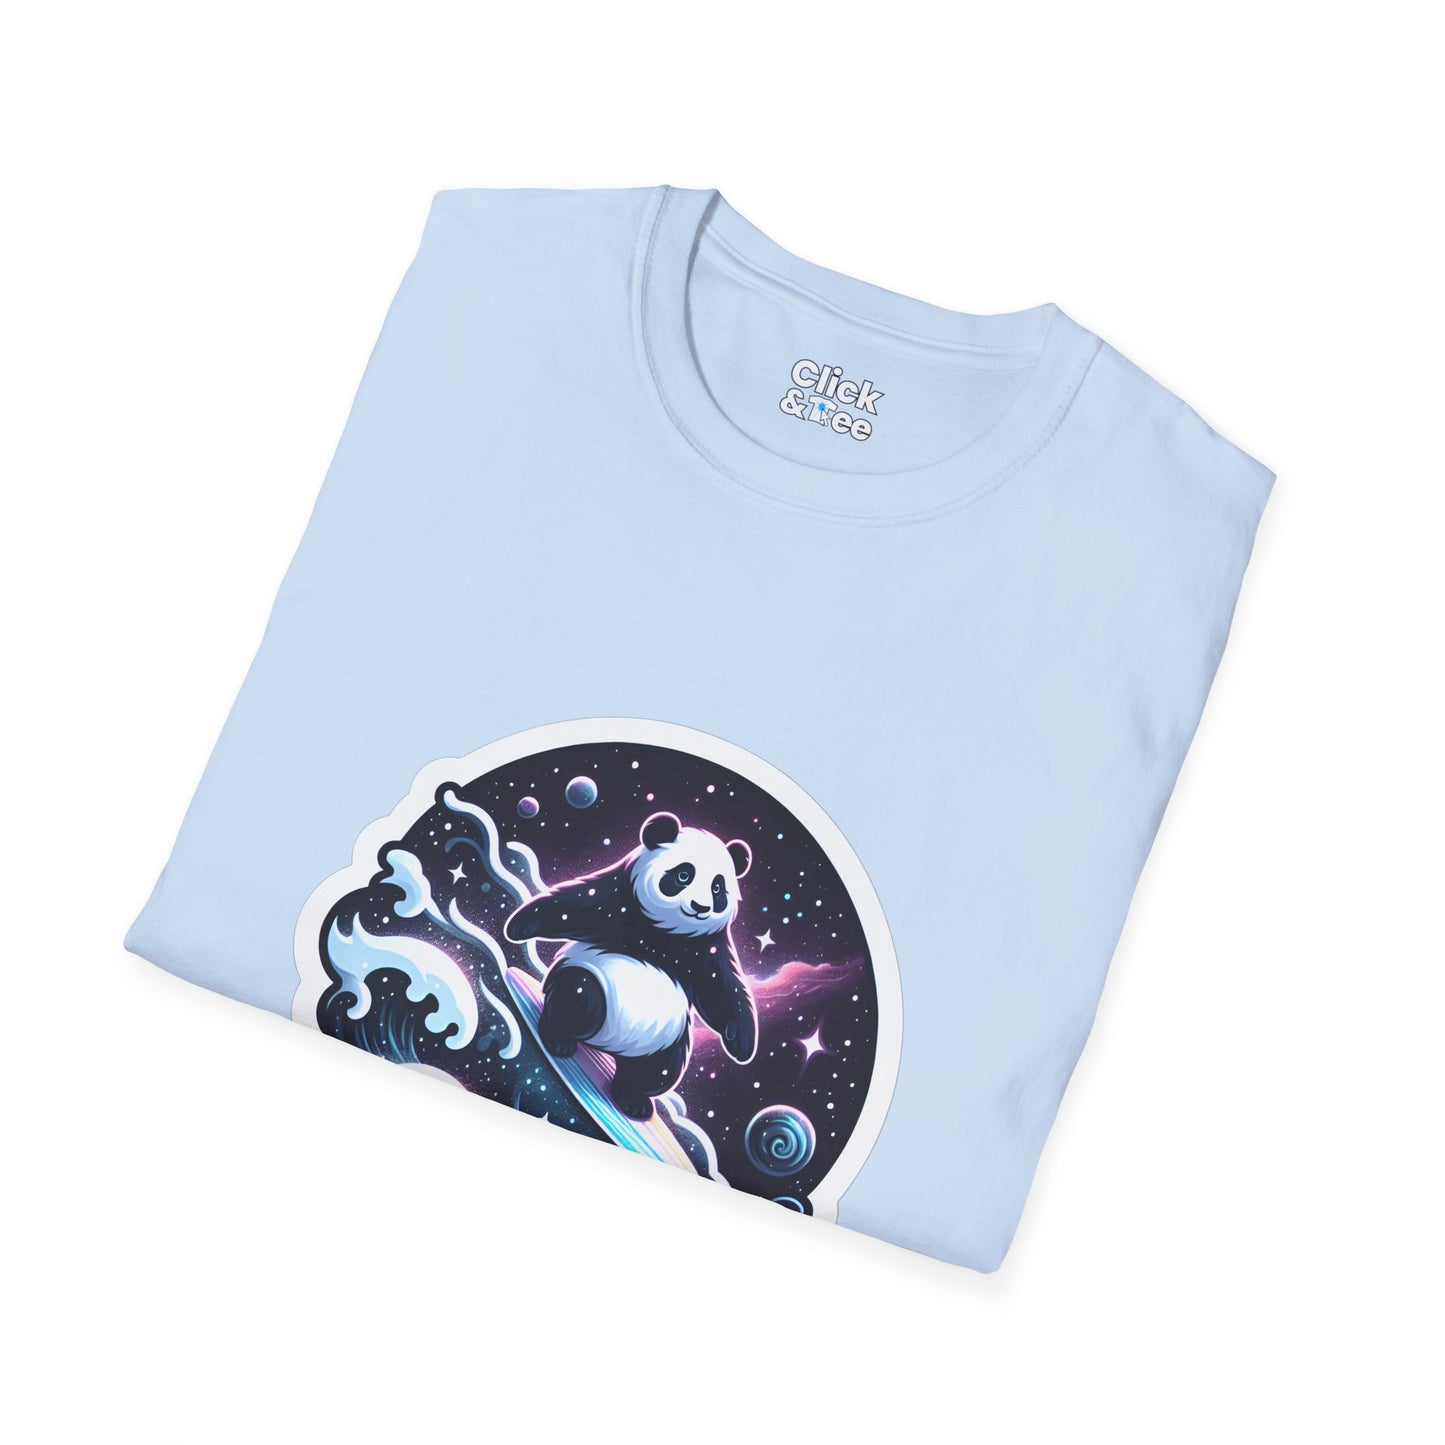 Digital Art T-Shirt - Magical Panda Surfing in space - Digital Art Style T-Shirt